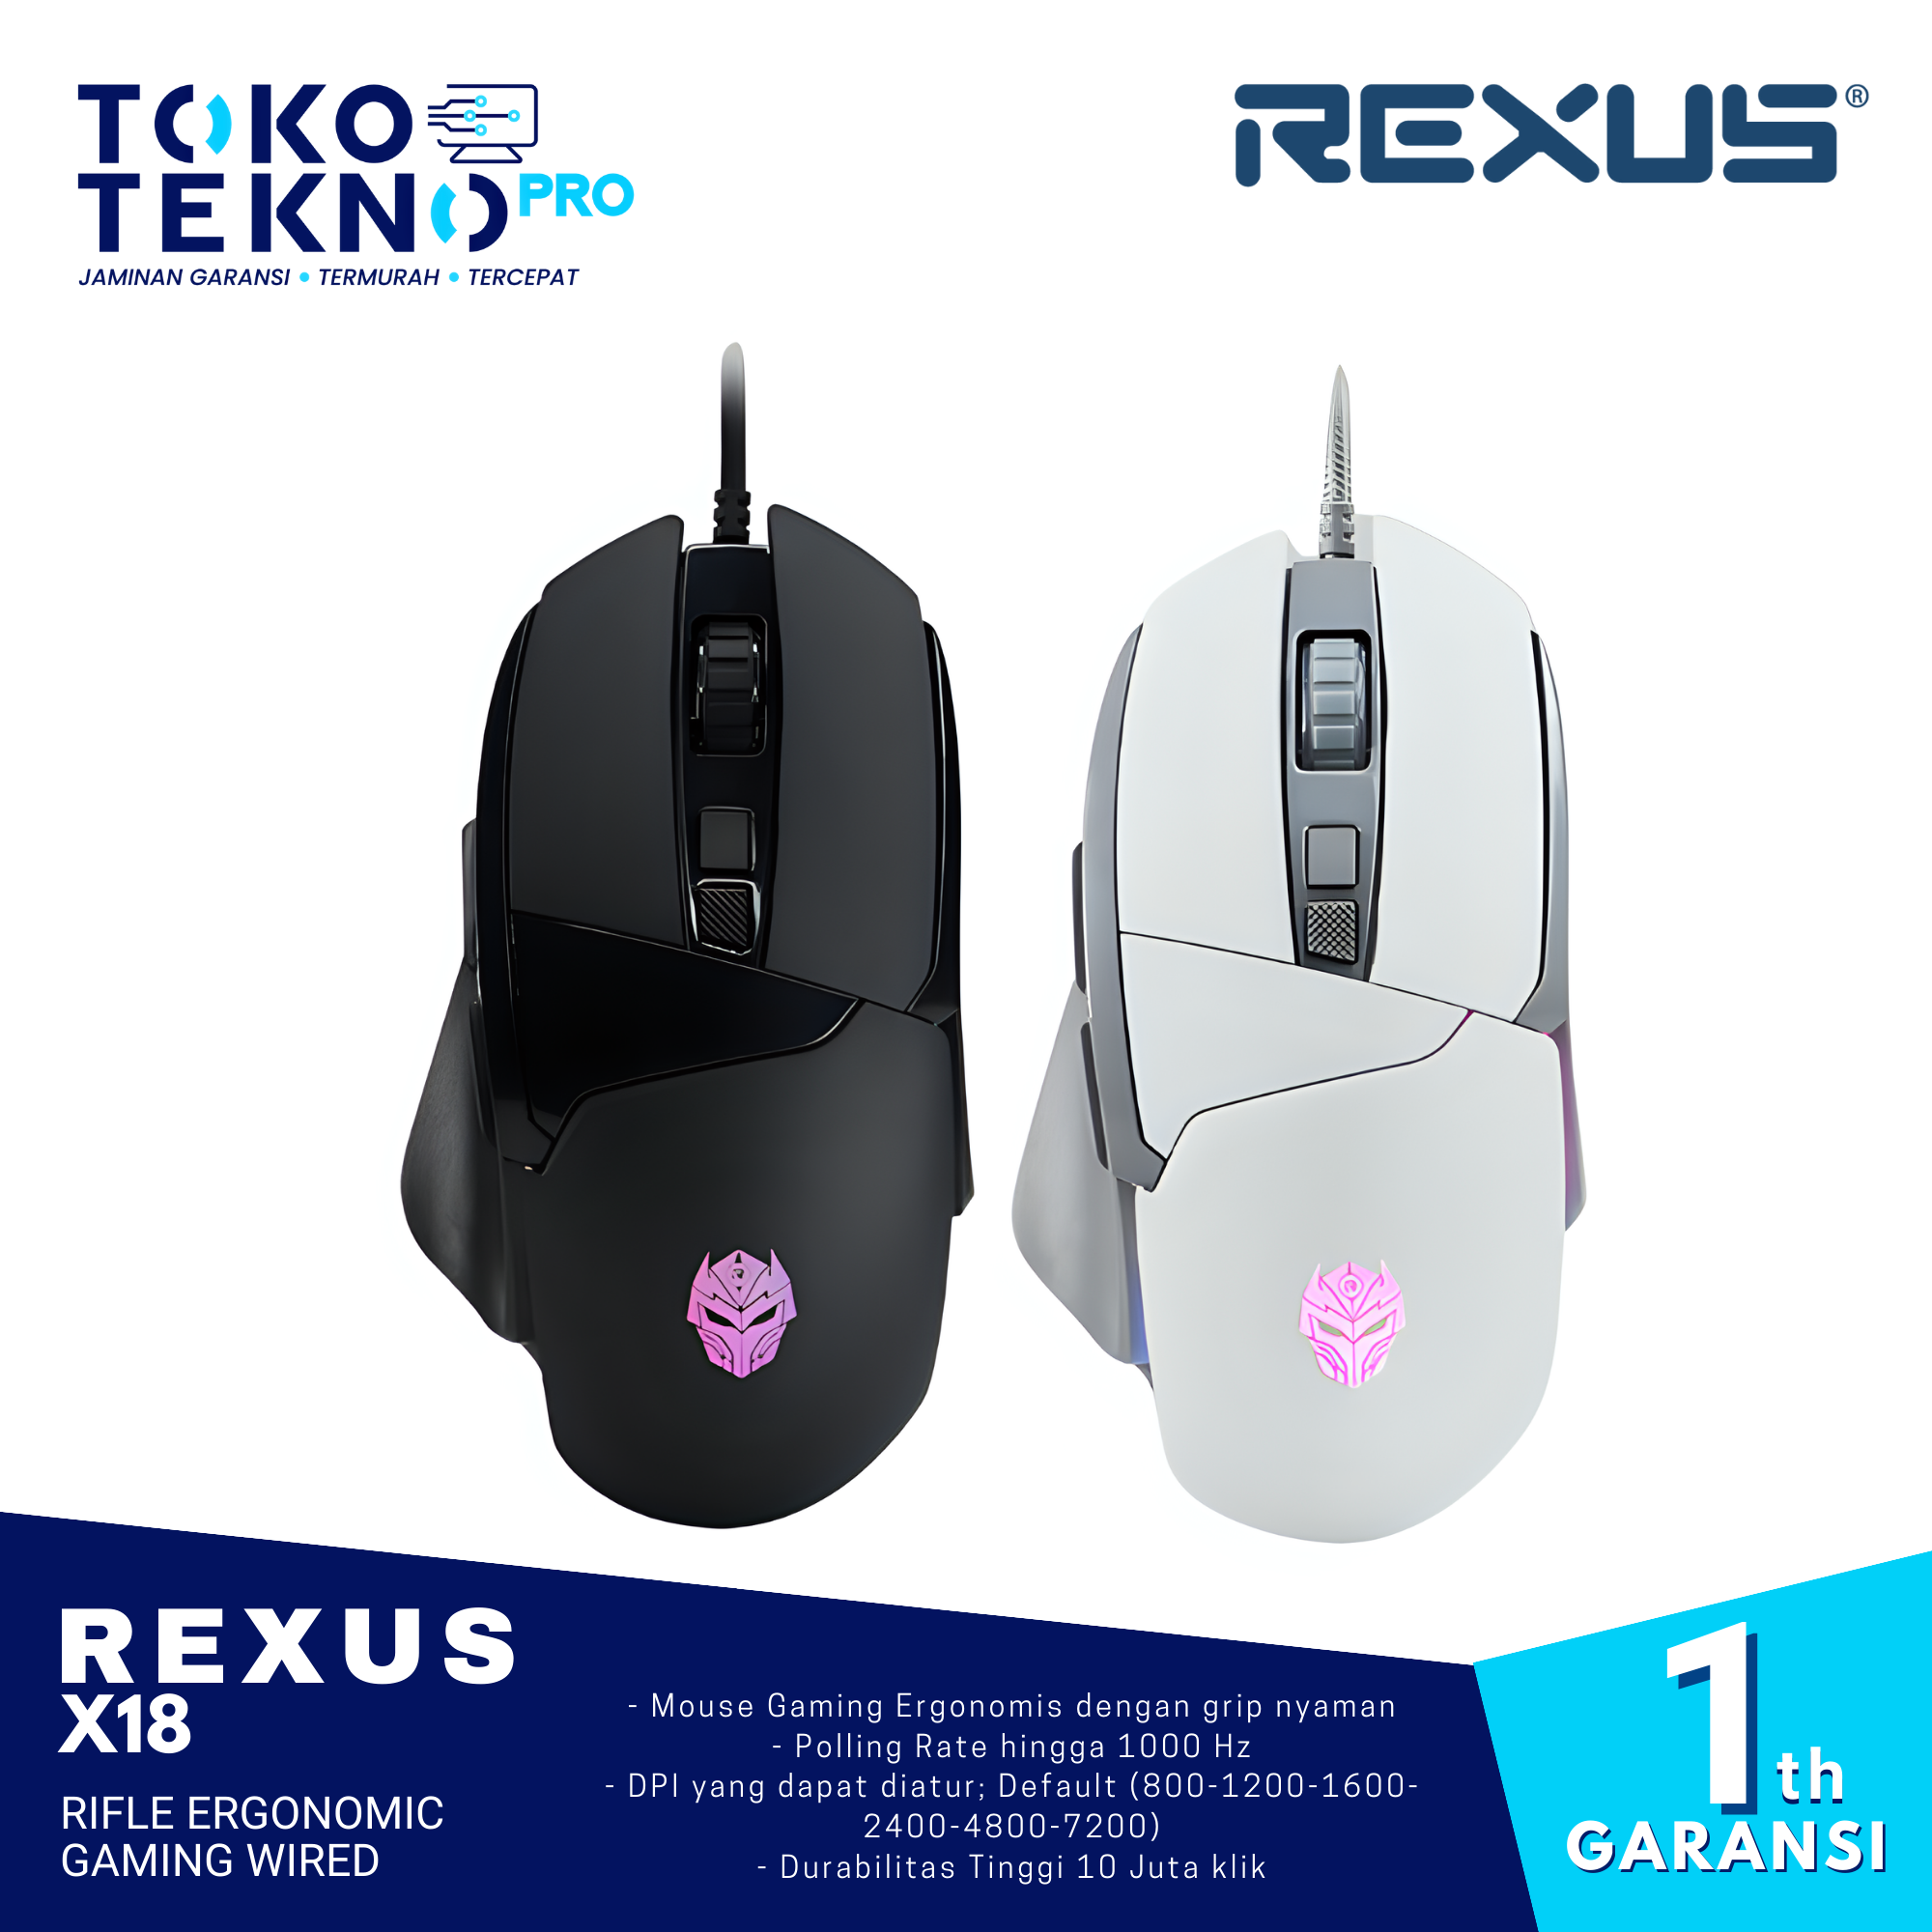 Rexus X18 Rifle Ergonomic Gaming Wired Mouse RGB